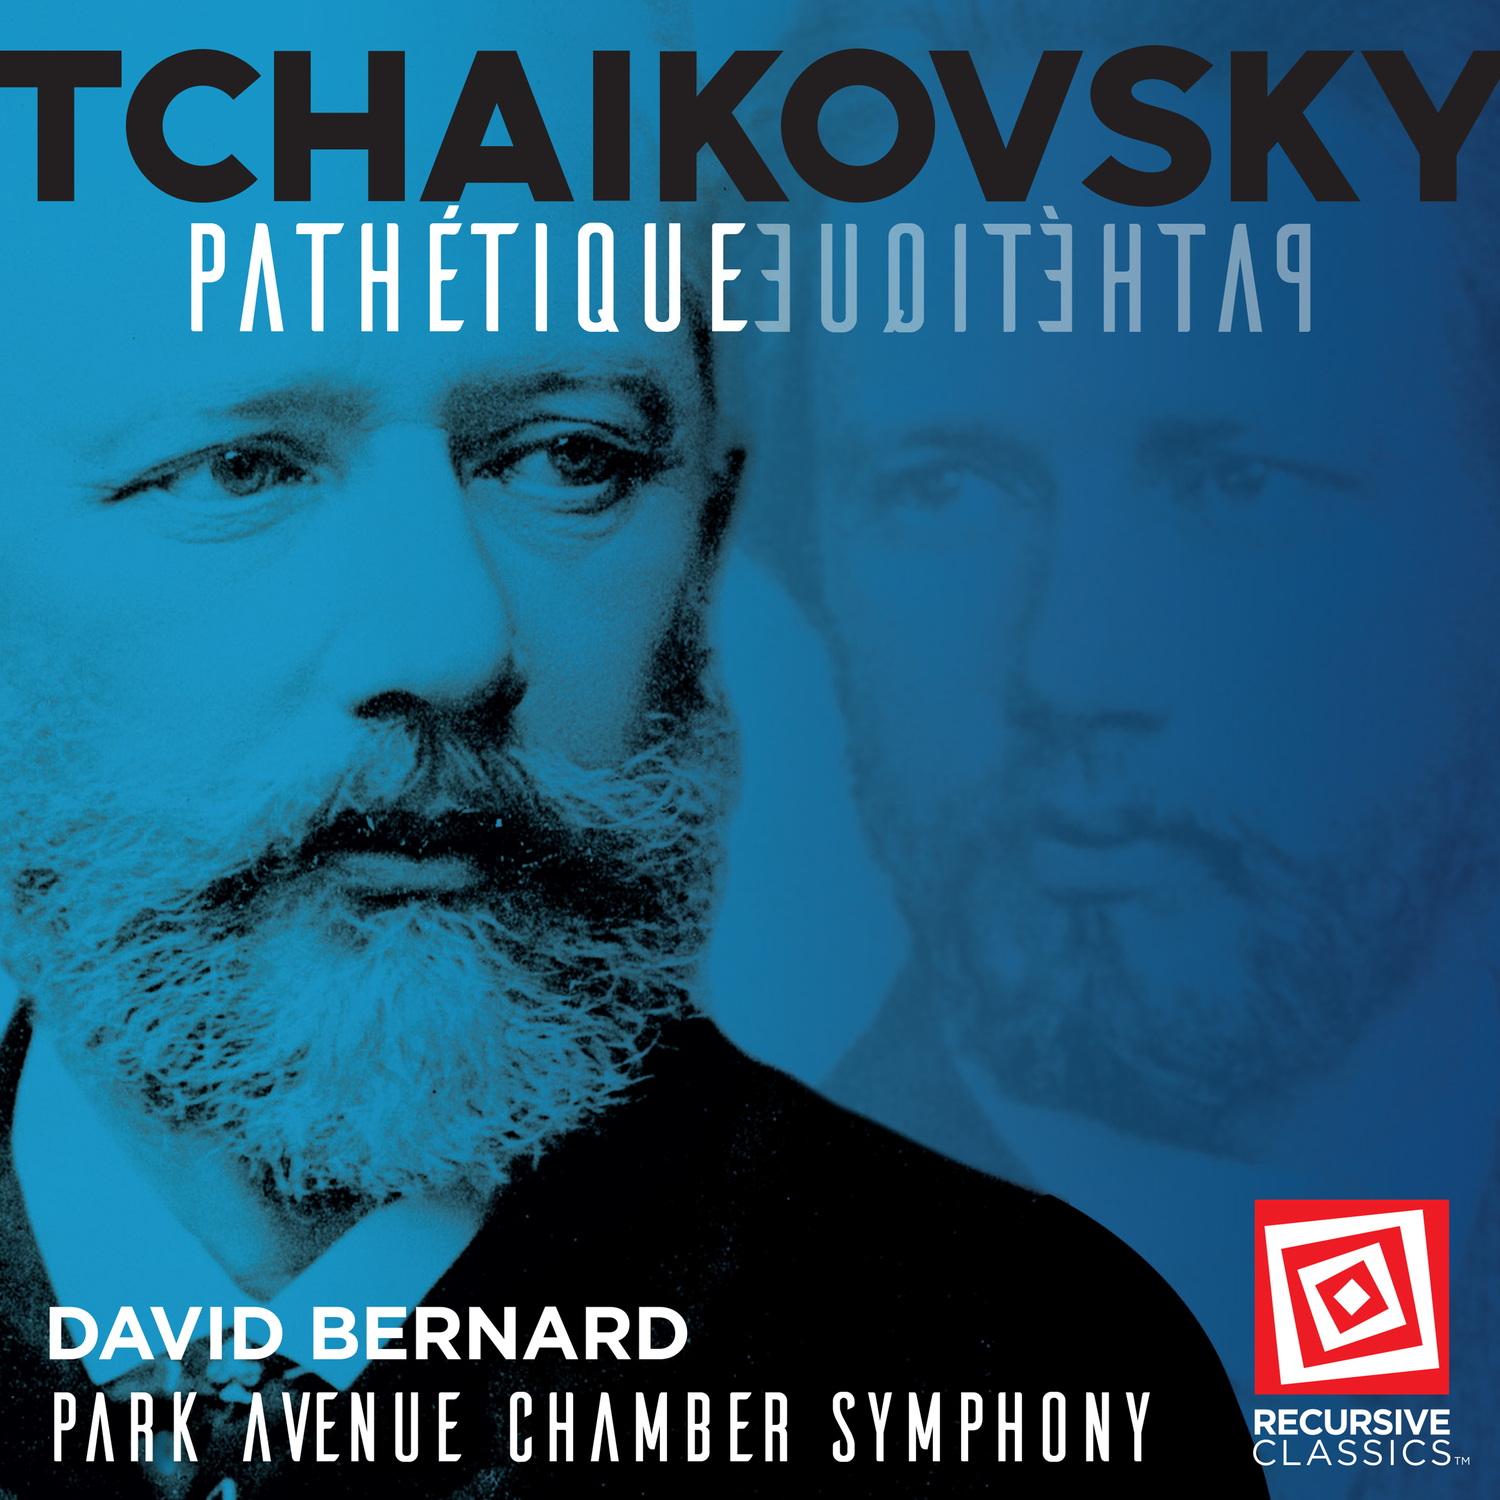 Review: TCHAIKOWSKI 6TH SYMPHONY by The Park Avenue Chamber Symphony 